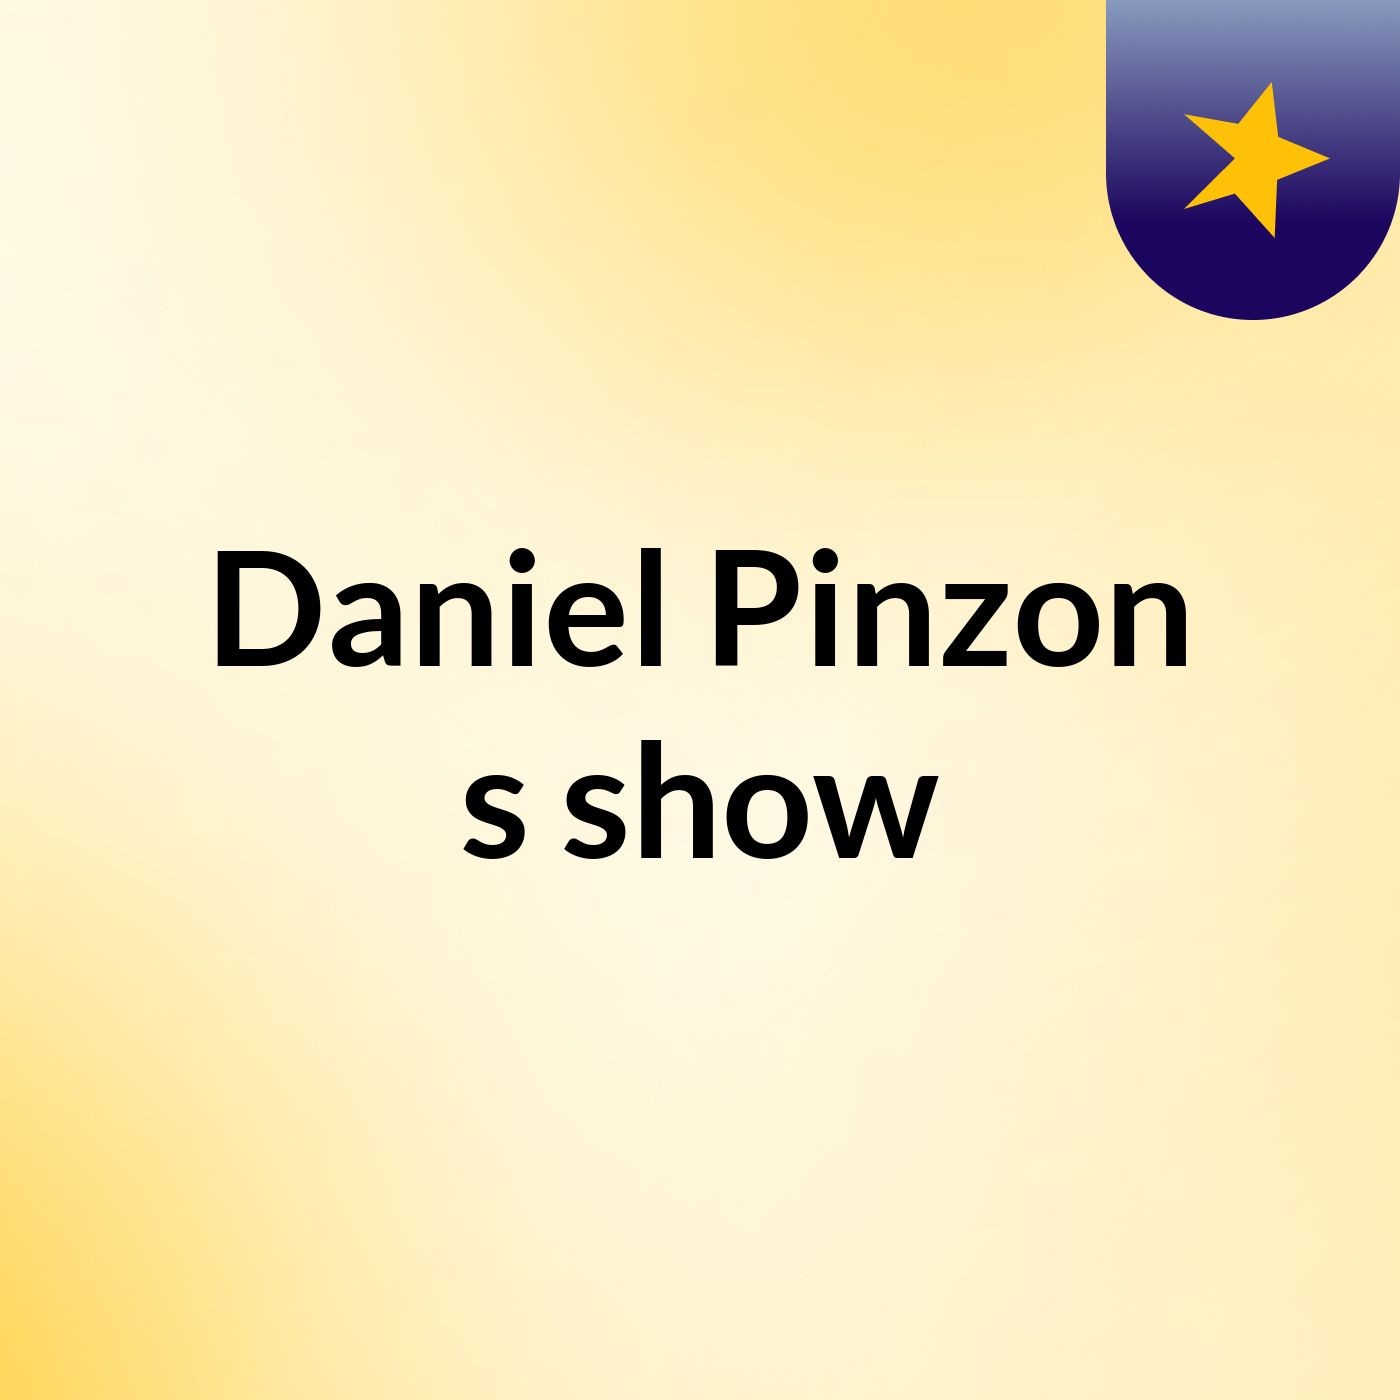 Daniel Pinzon's show